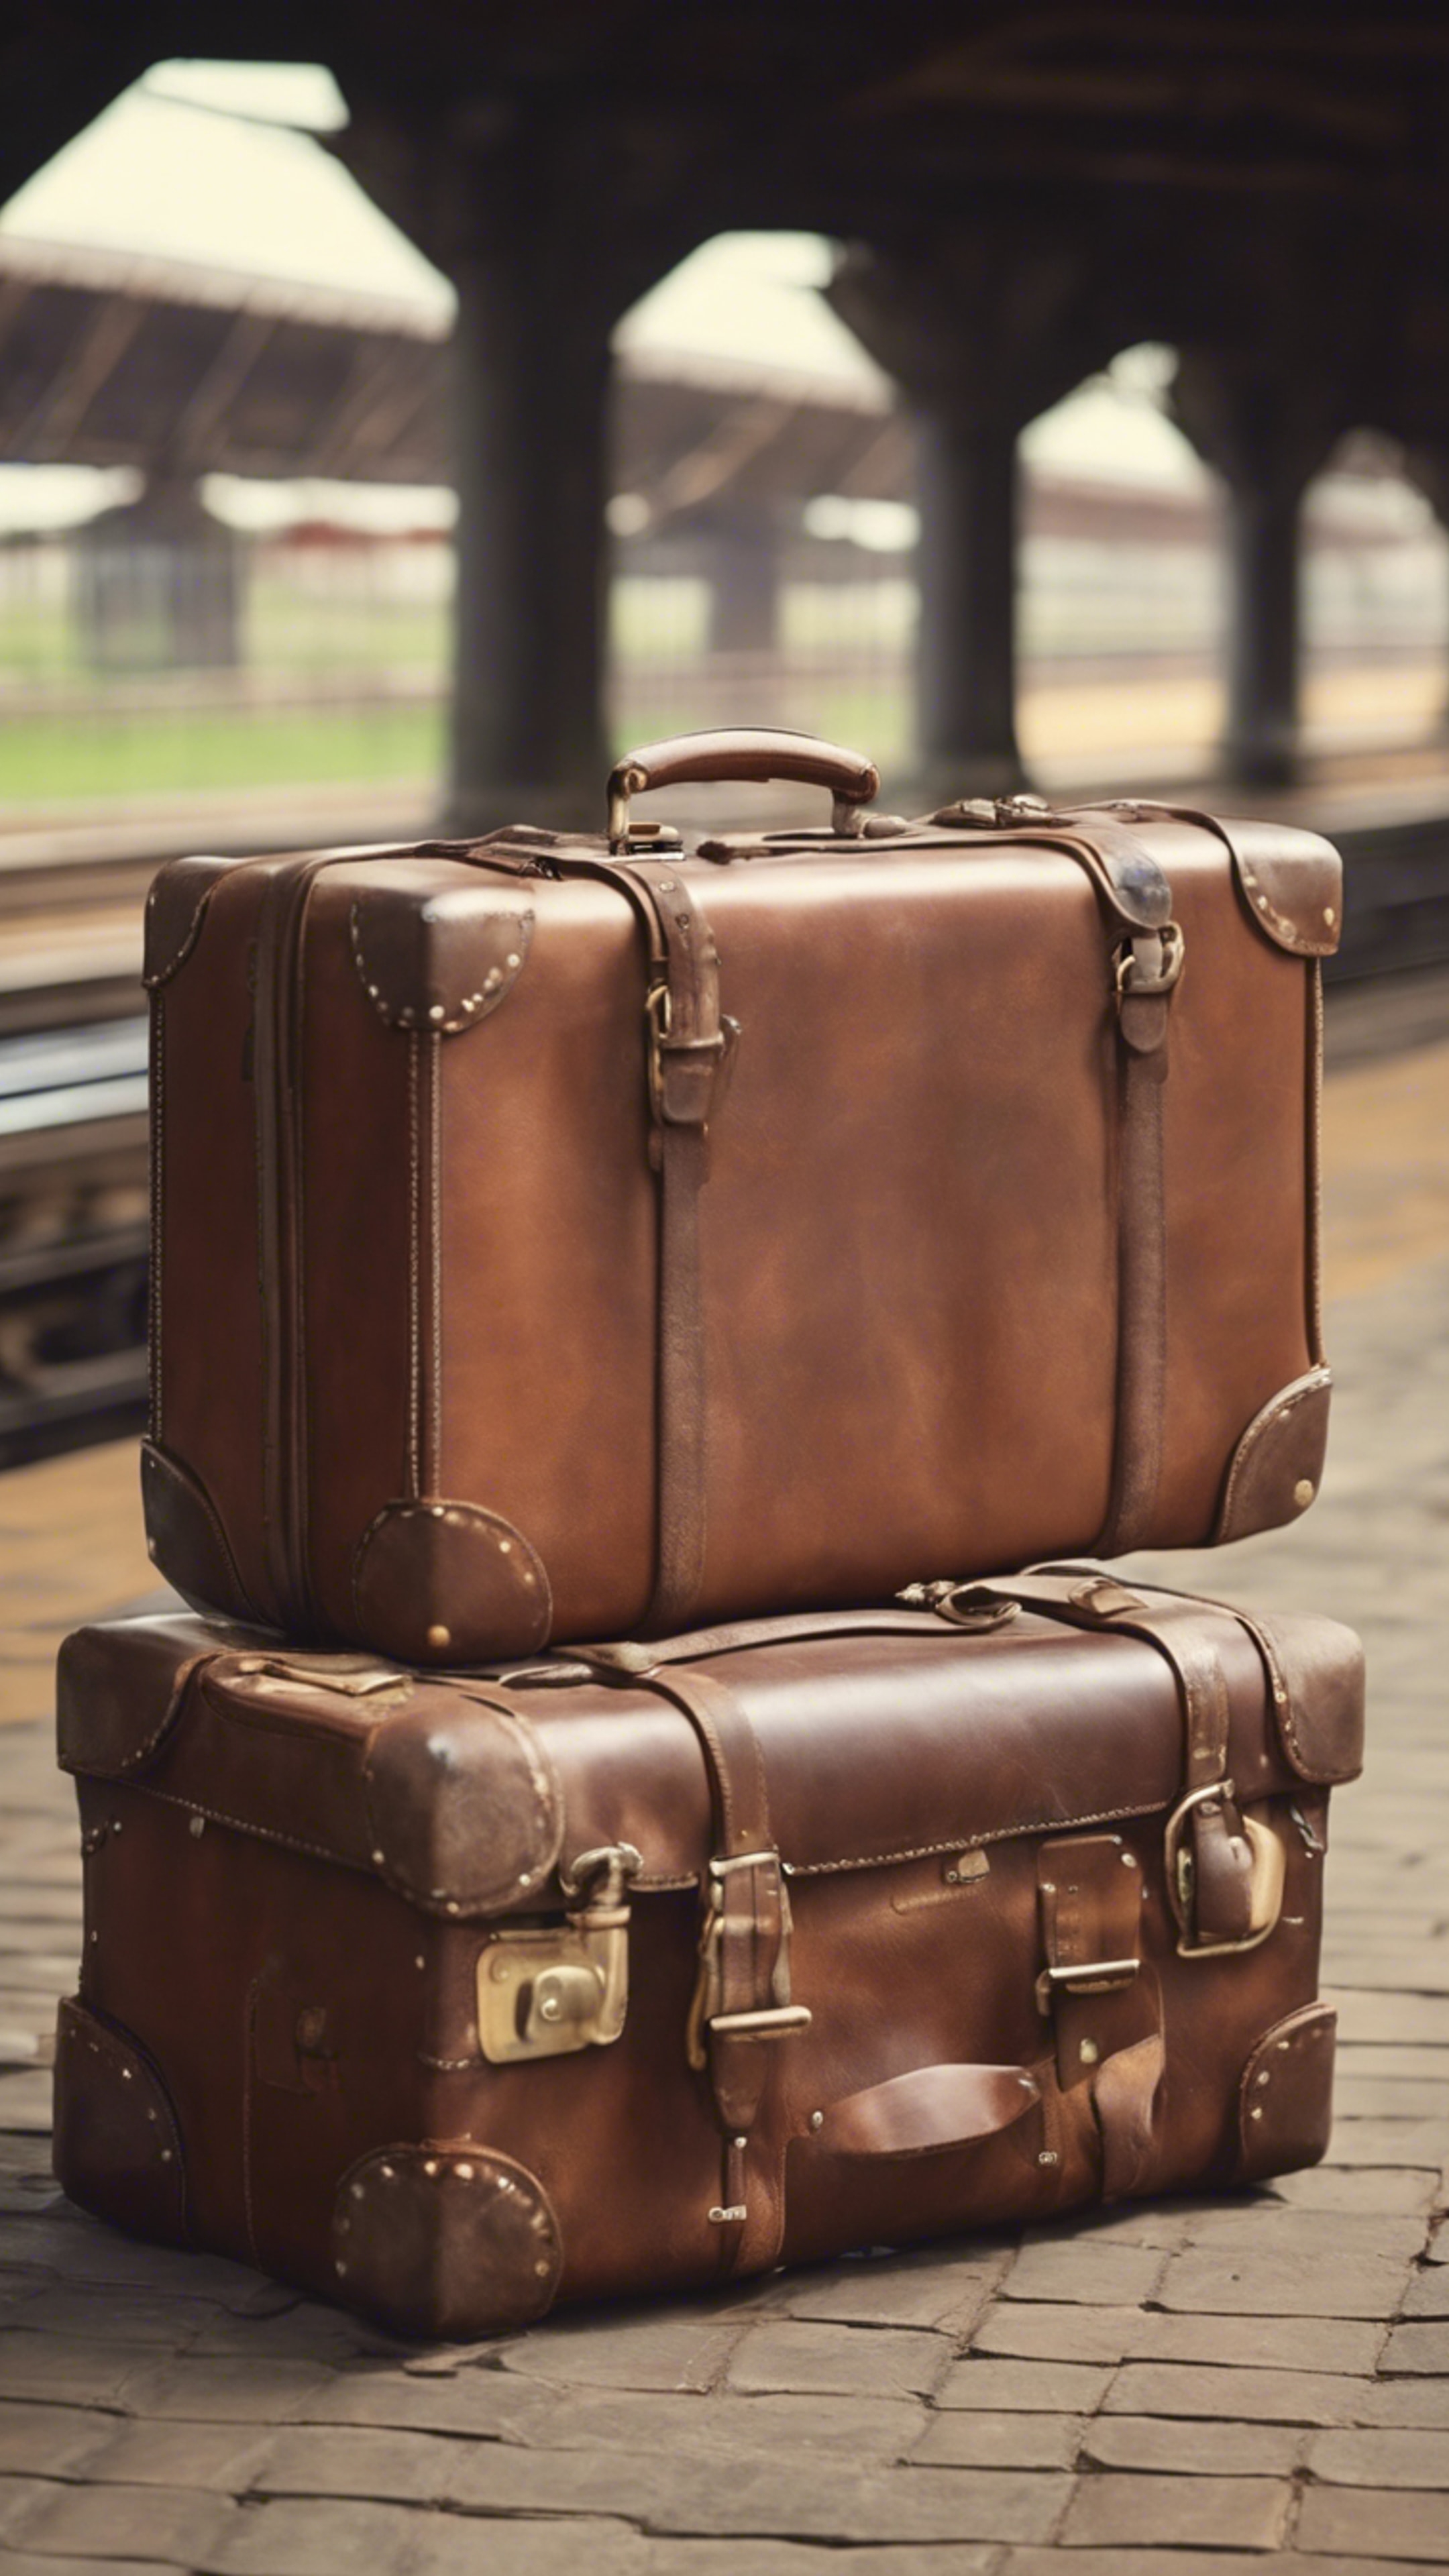 A rustic brown leather suitcase with travel tags, sitting at a quaint railway station. Papel de parede[6b7e956de06740cdbd0e]